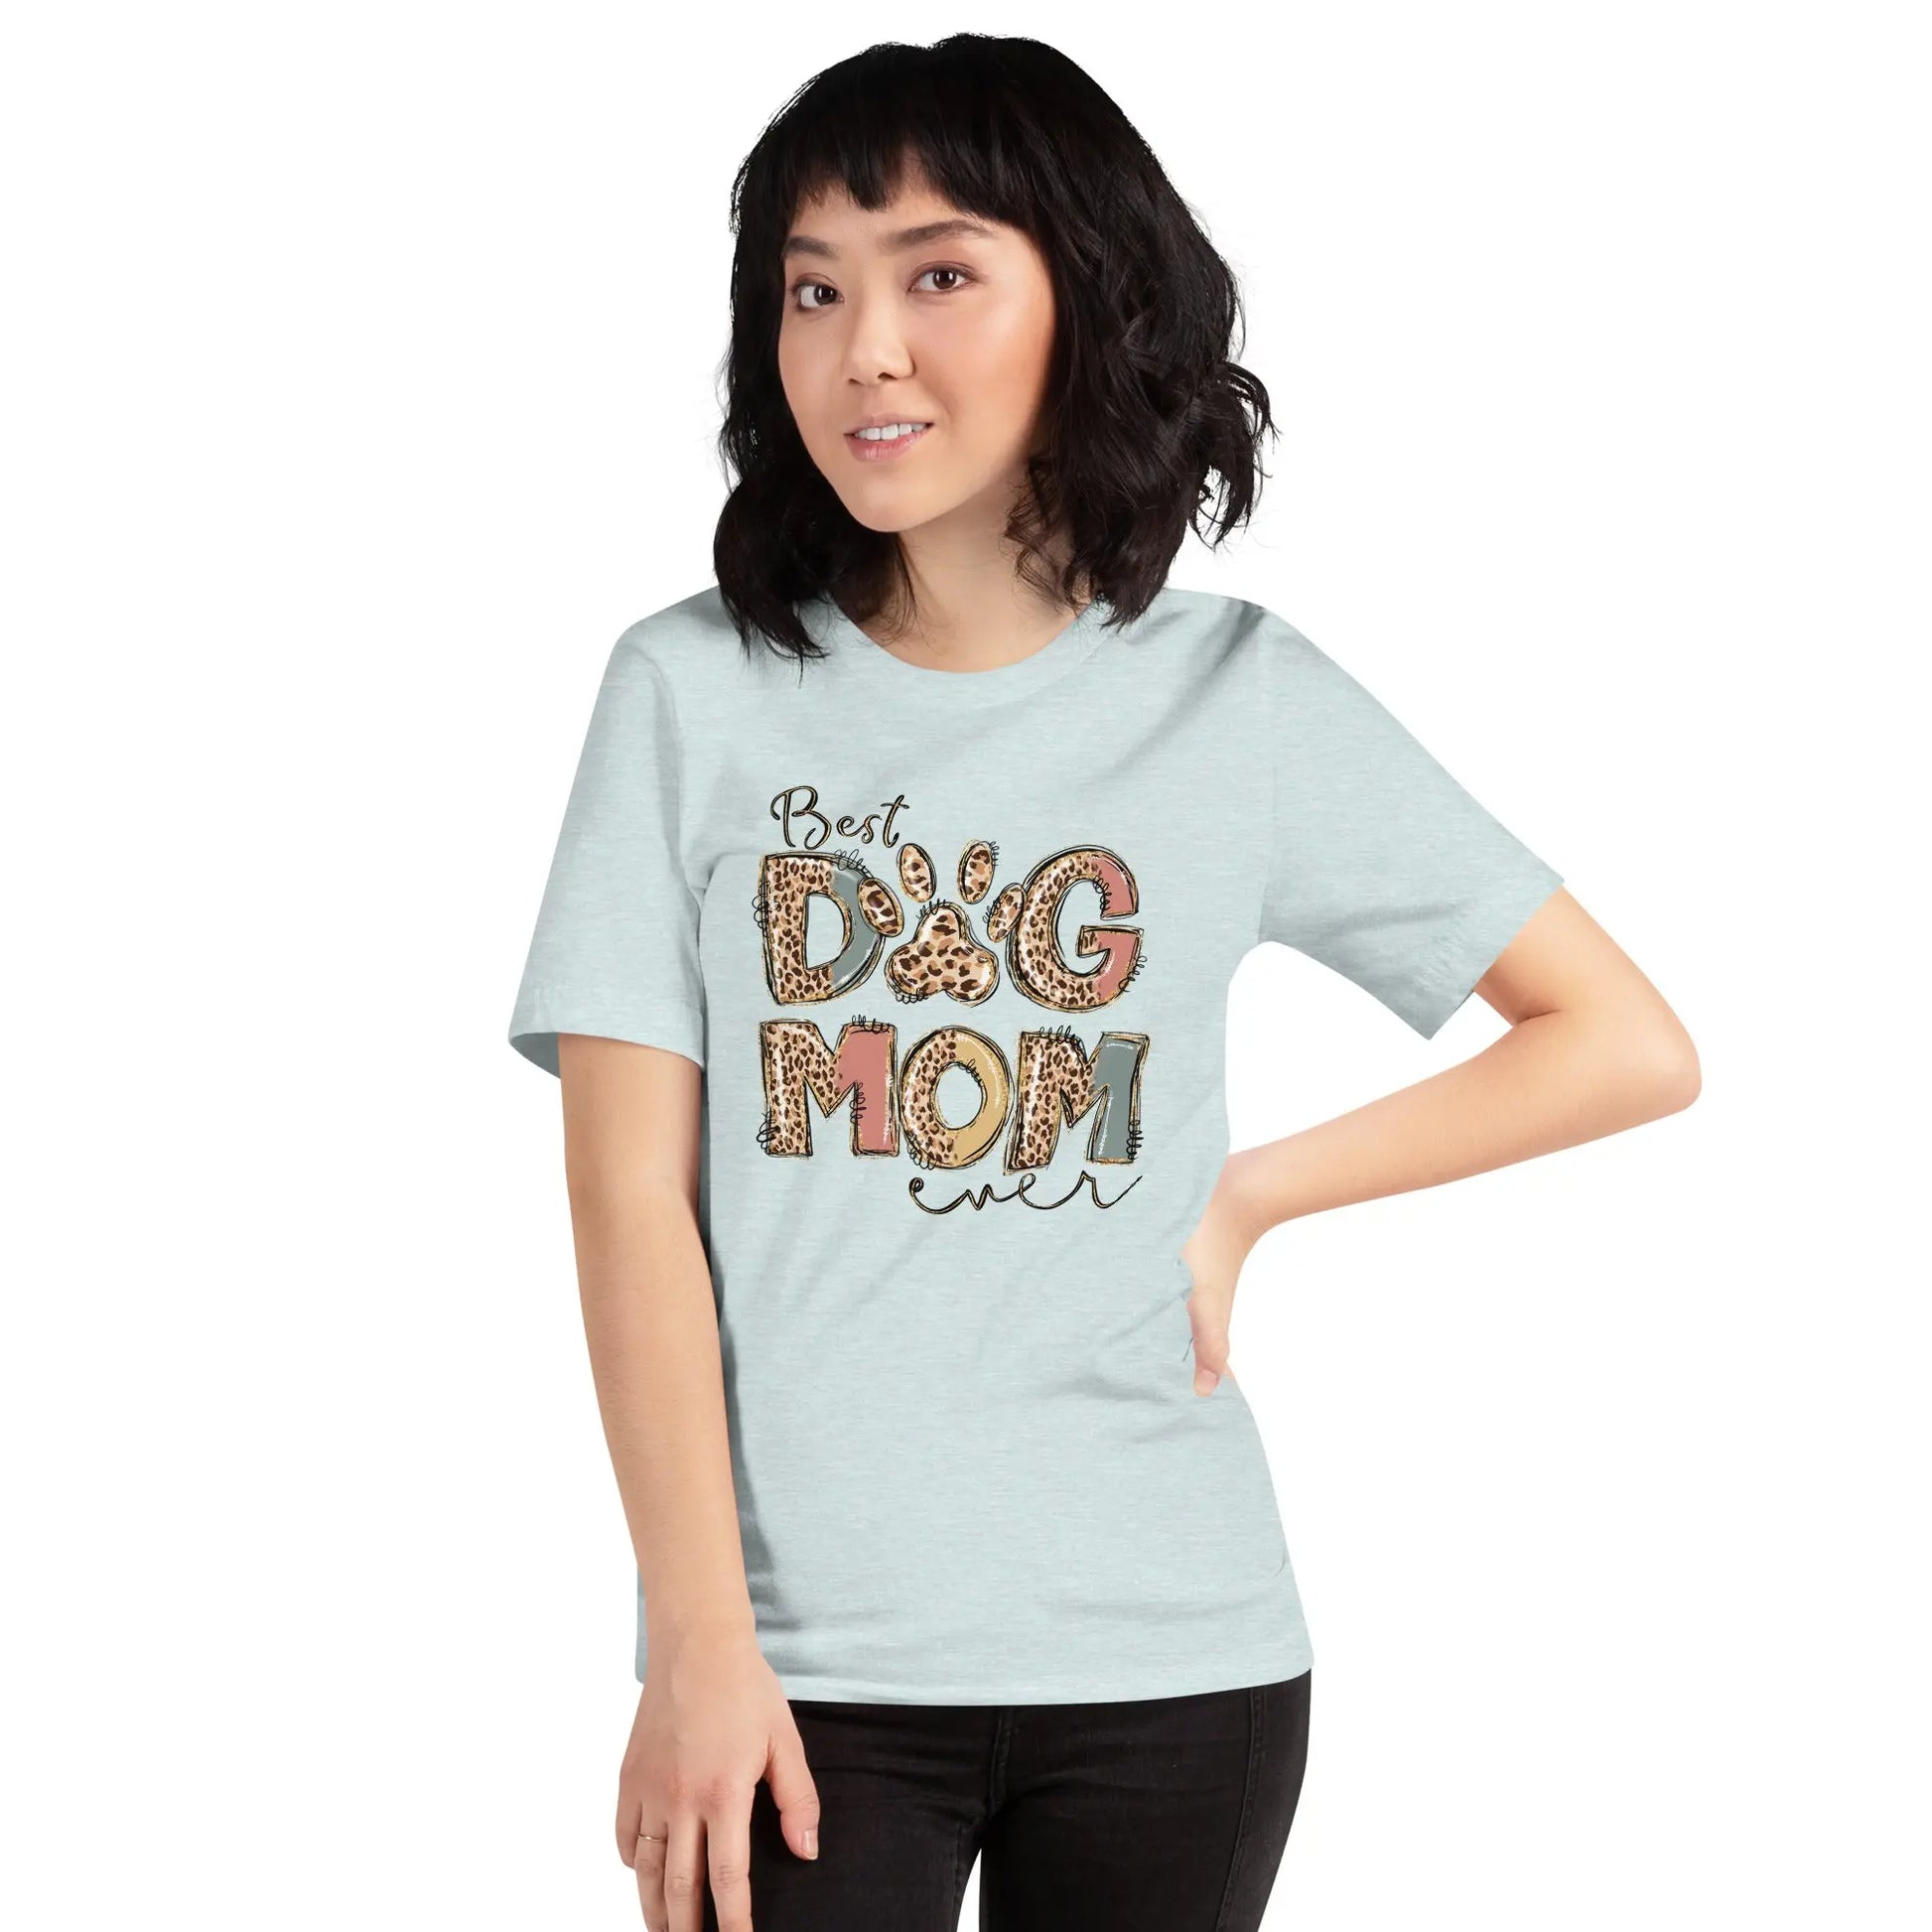 Best Dog Mom Ever t-shirt Amazing Faith Designs